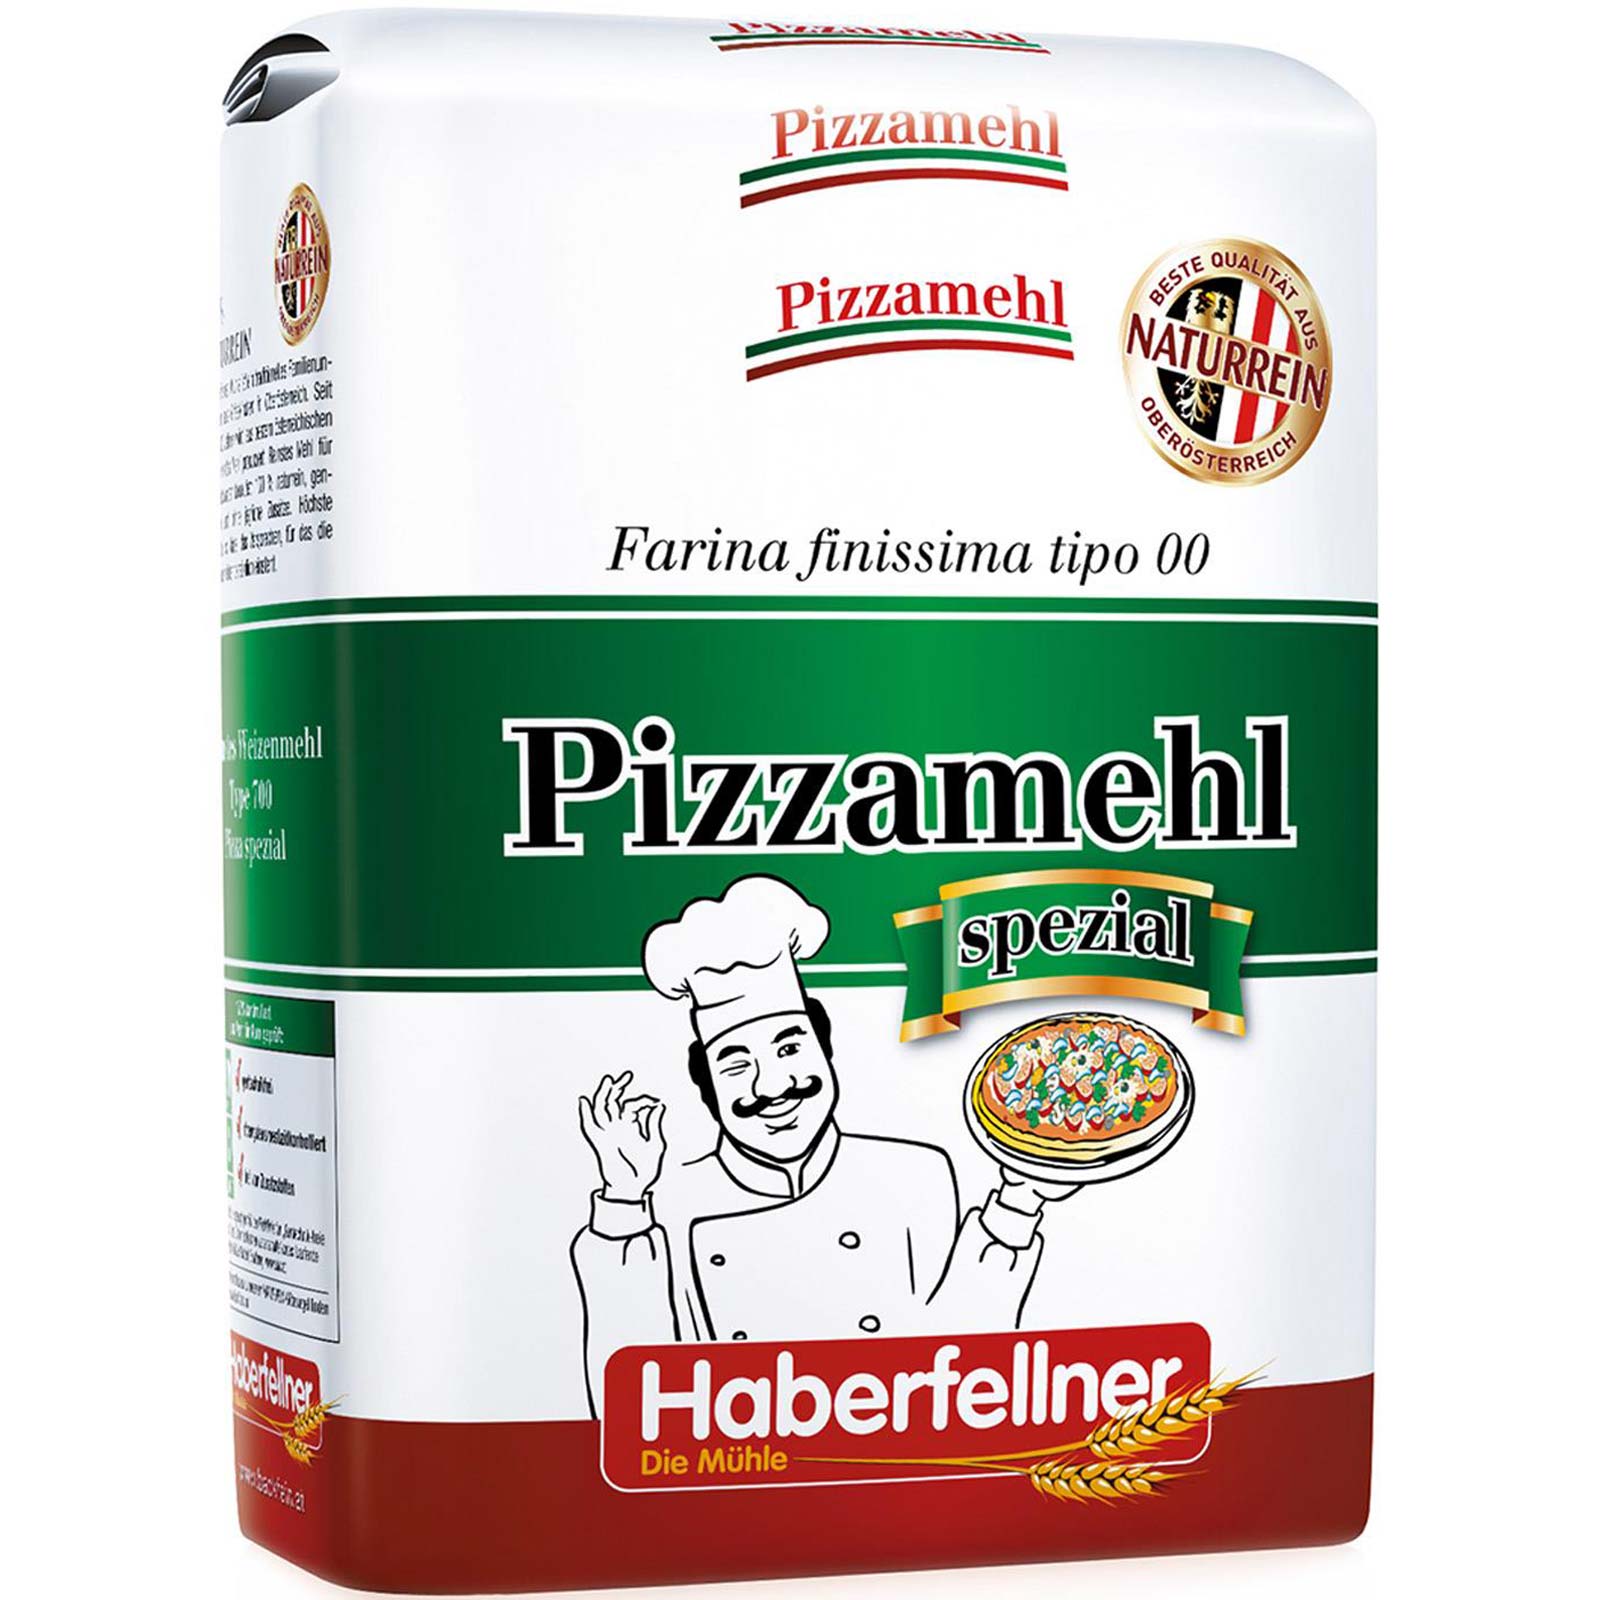 Farine extra fine pour pizza type 00 (FR 45 / AT W700 / DE 550) Haberfellner 1 kg